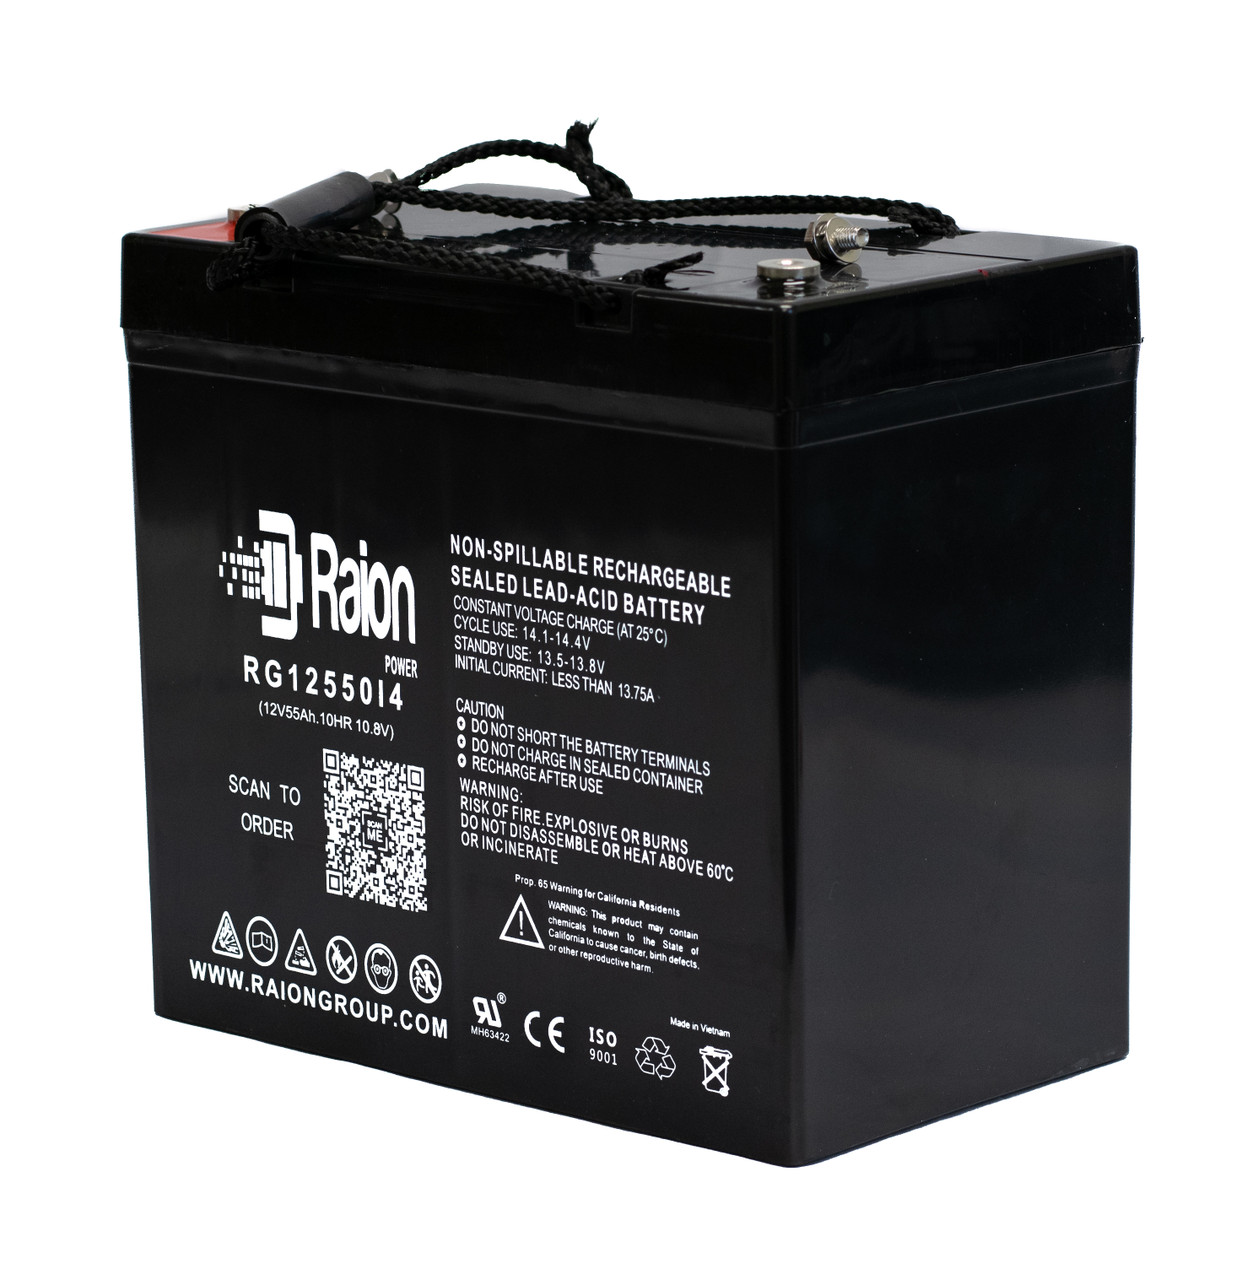 Raion Power Replacement 12V 55Ah Battery for Magnavolt SLA12-55G - 1 Pack